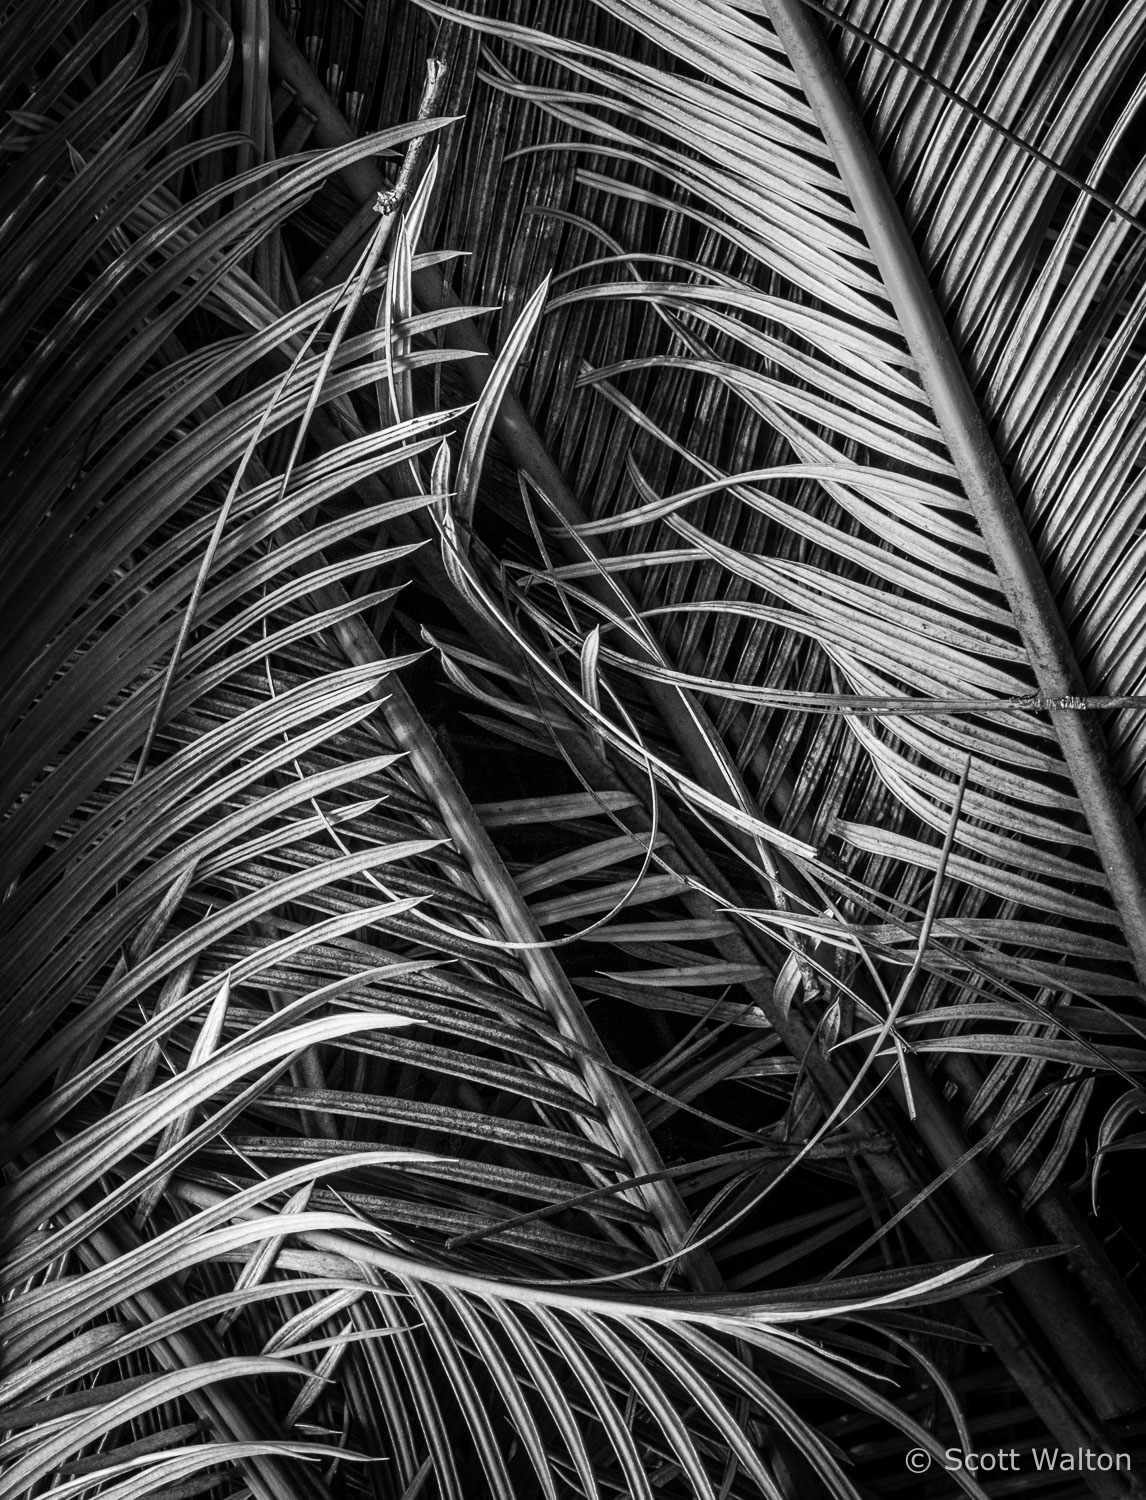 king-sego-palm-leaves-detail-close-niceville-florida.jpg